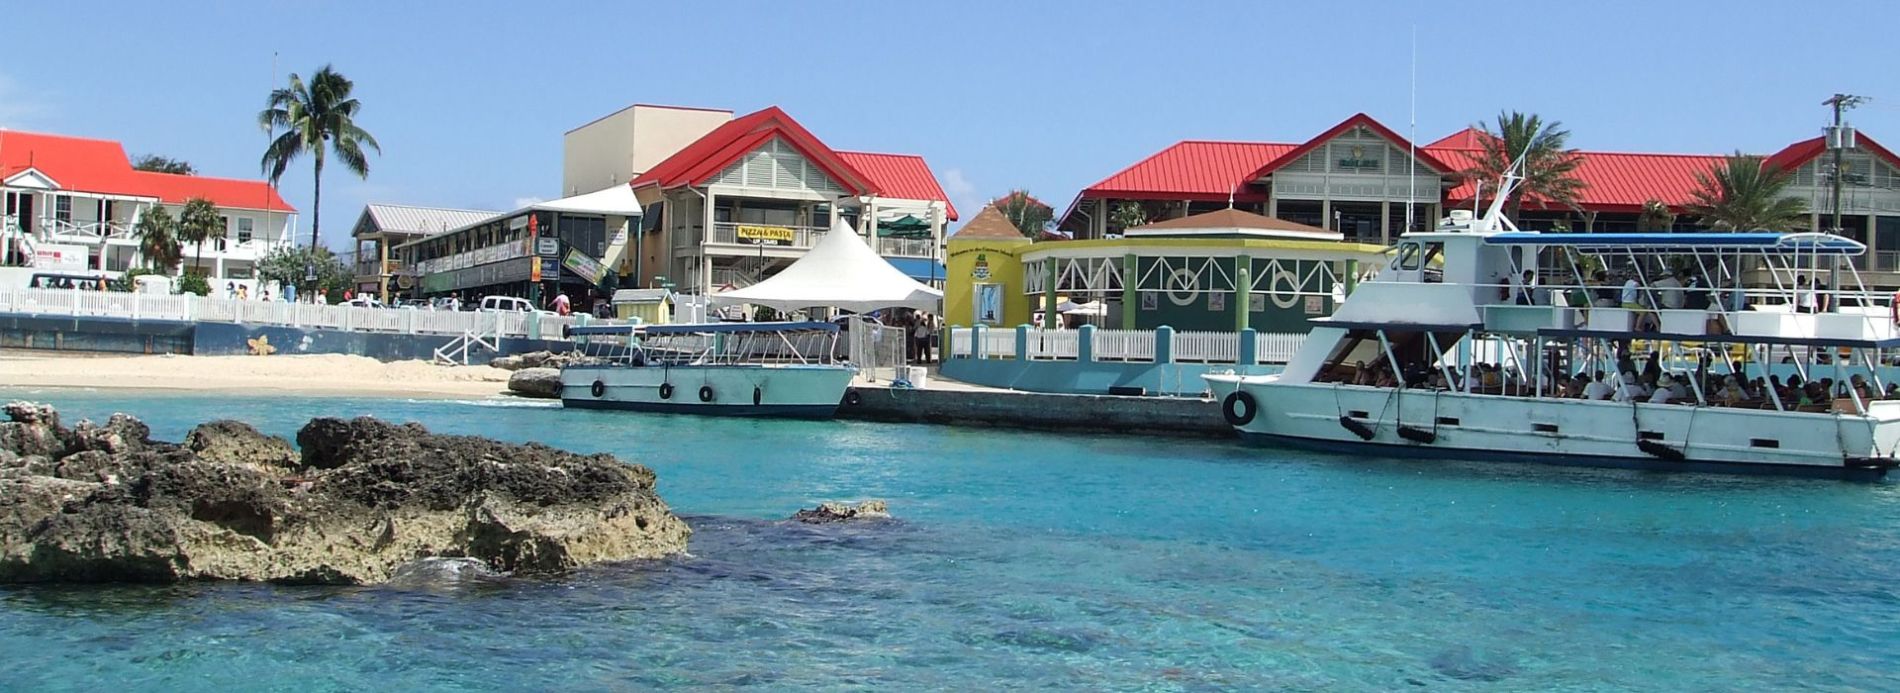 Grand Cayman harbor